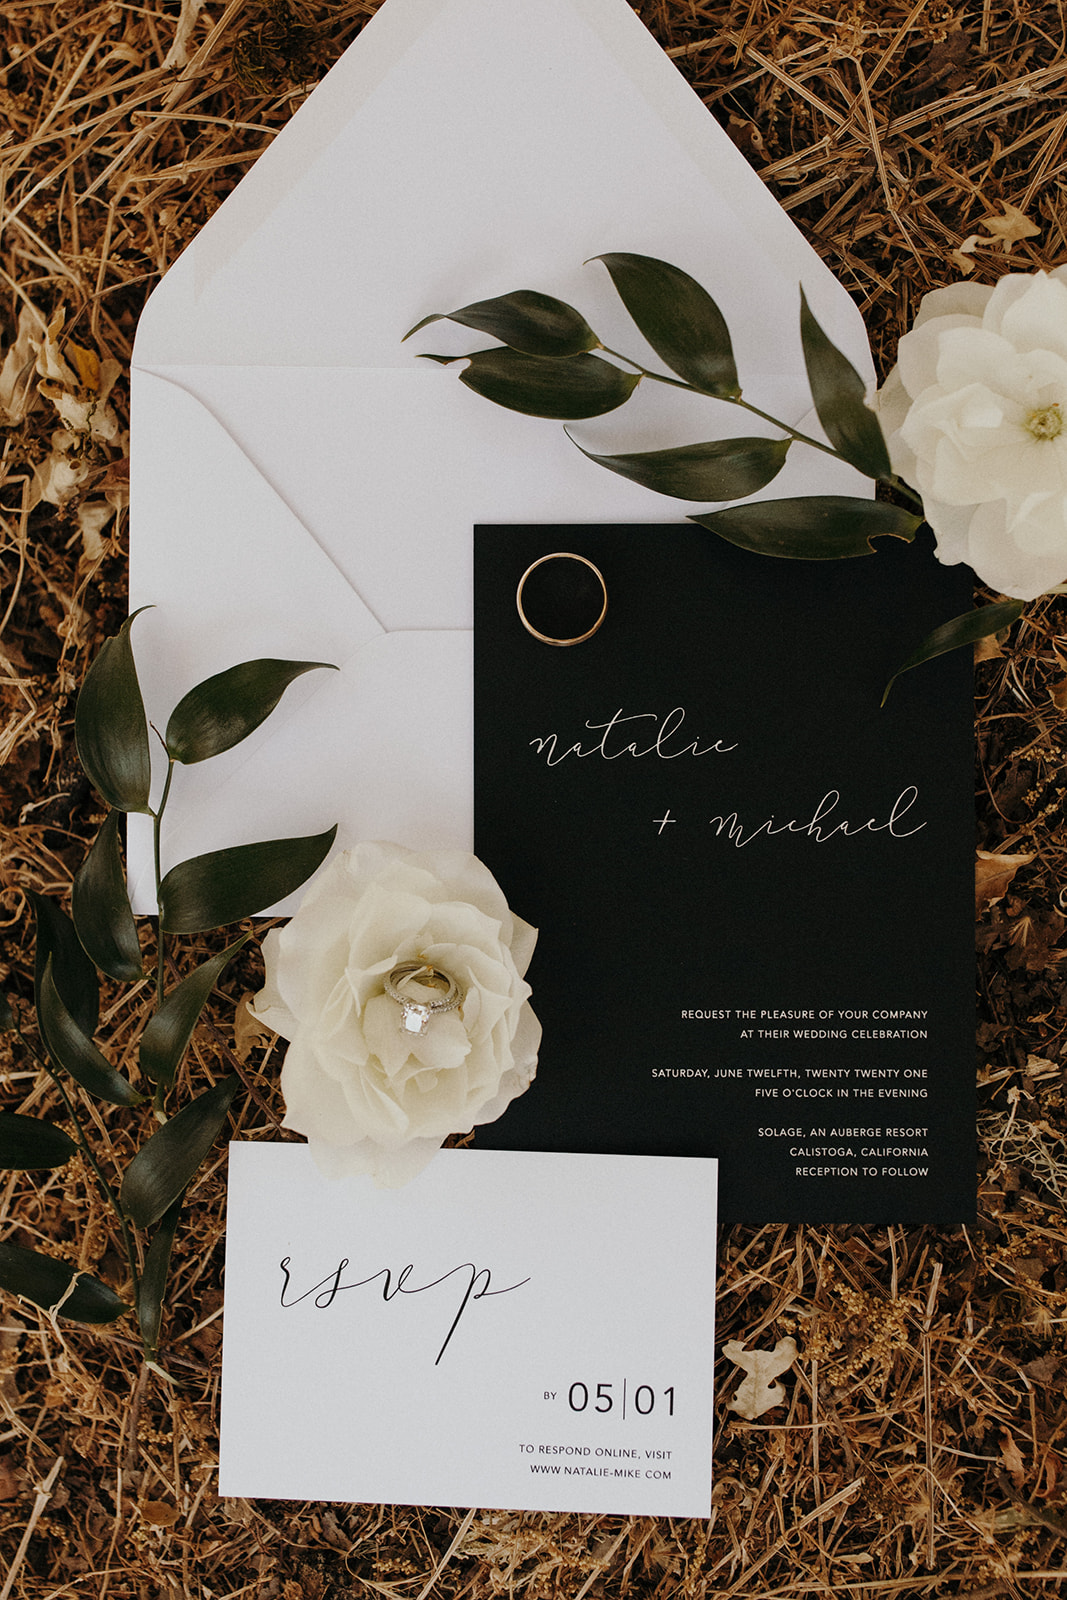 Modern monochrome wedding invitations